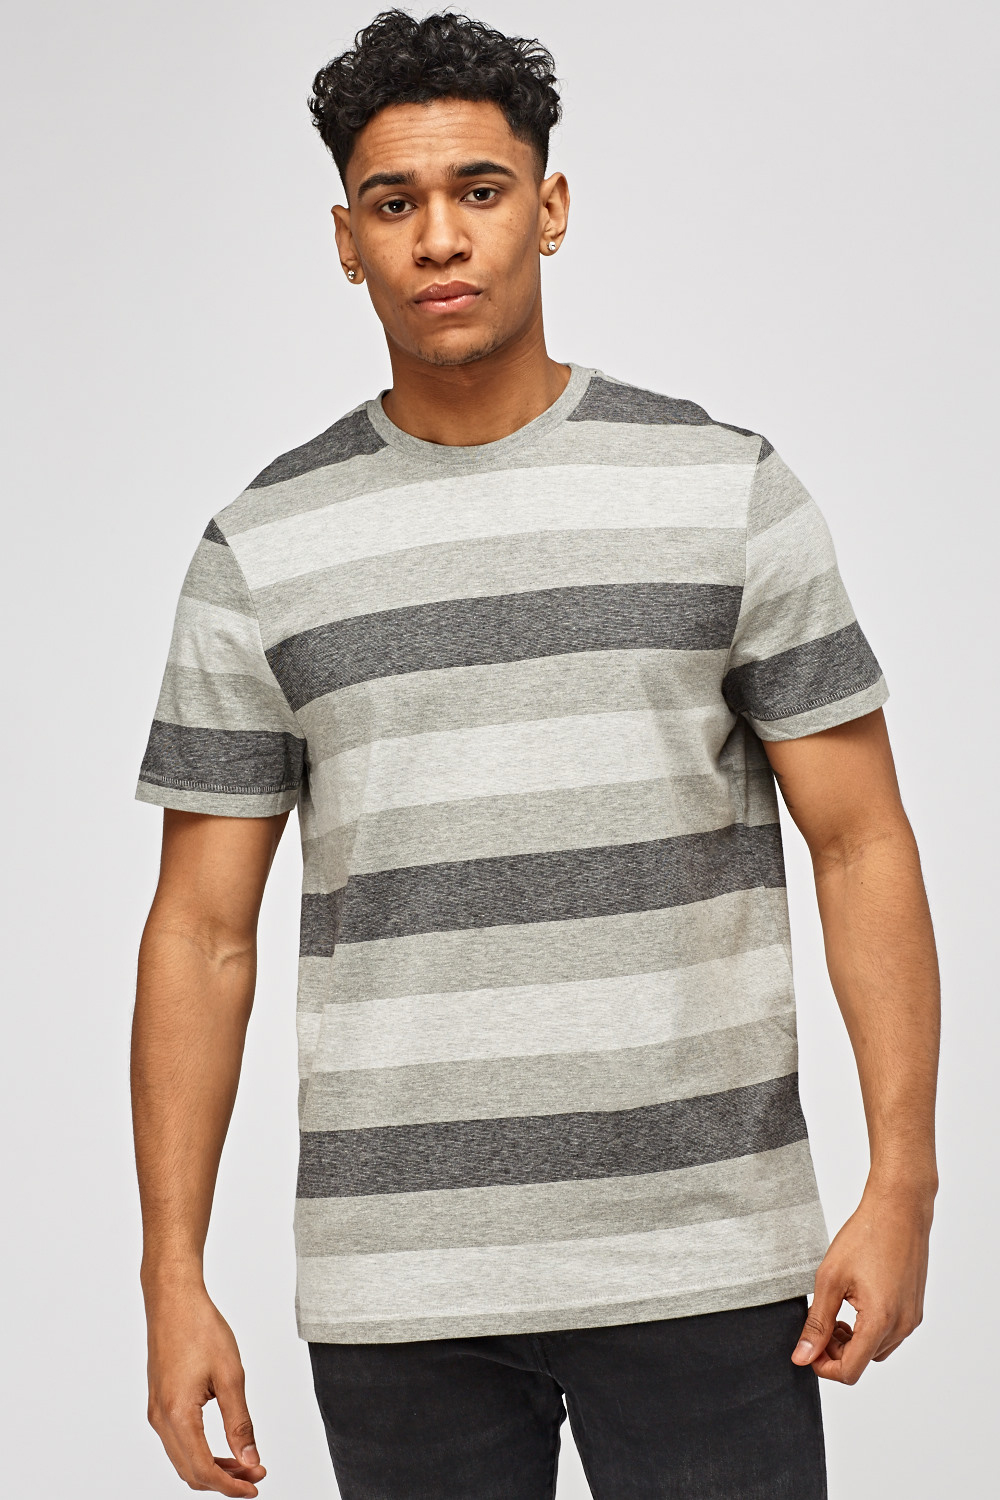 Striped Grey T-Shirt - Just $6